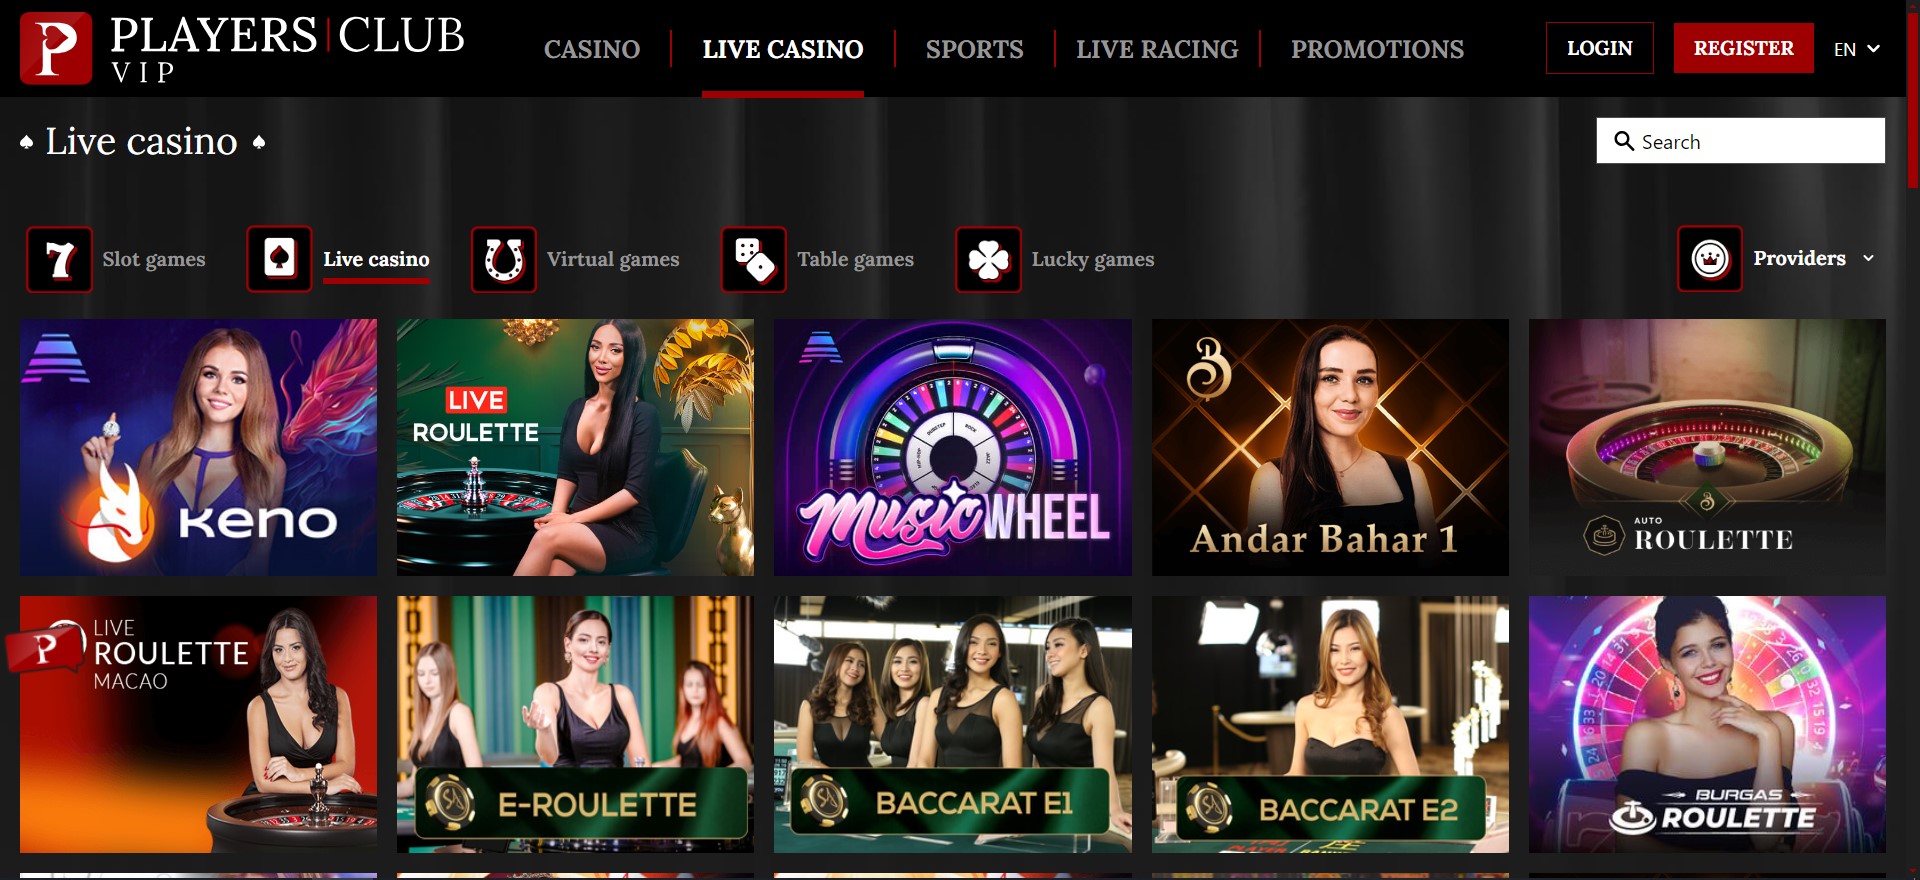 Players Club VIP Casino 3